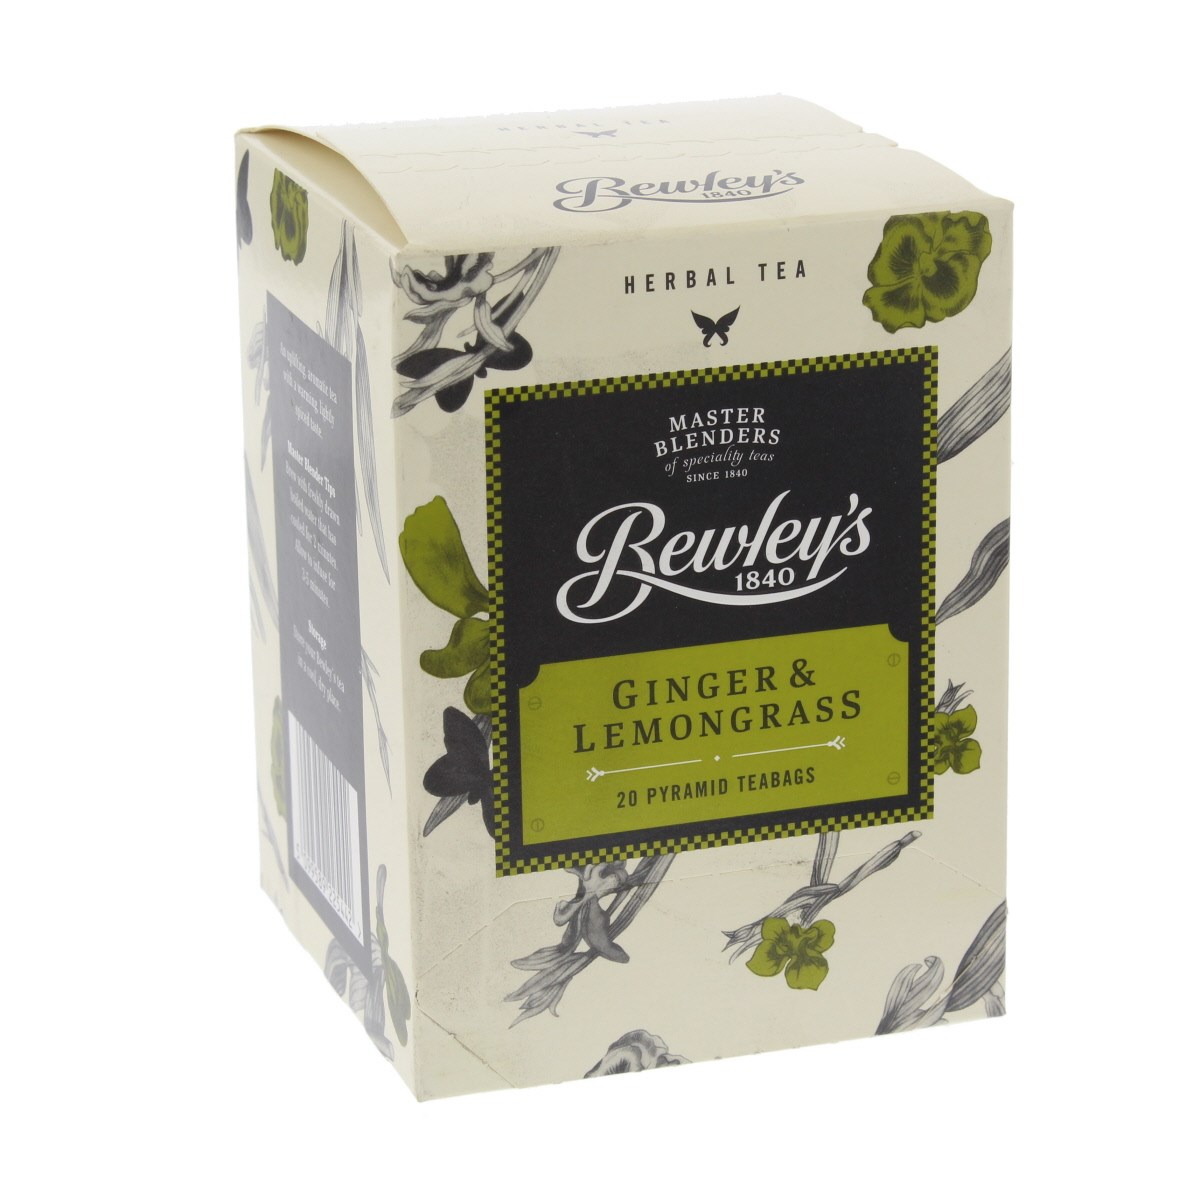 Bewleys Ginger Lemongrass Tea Bags